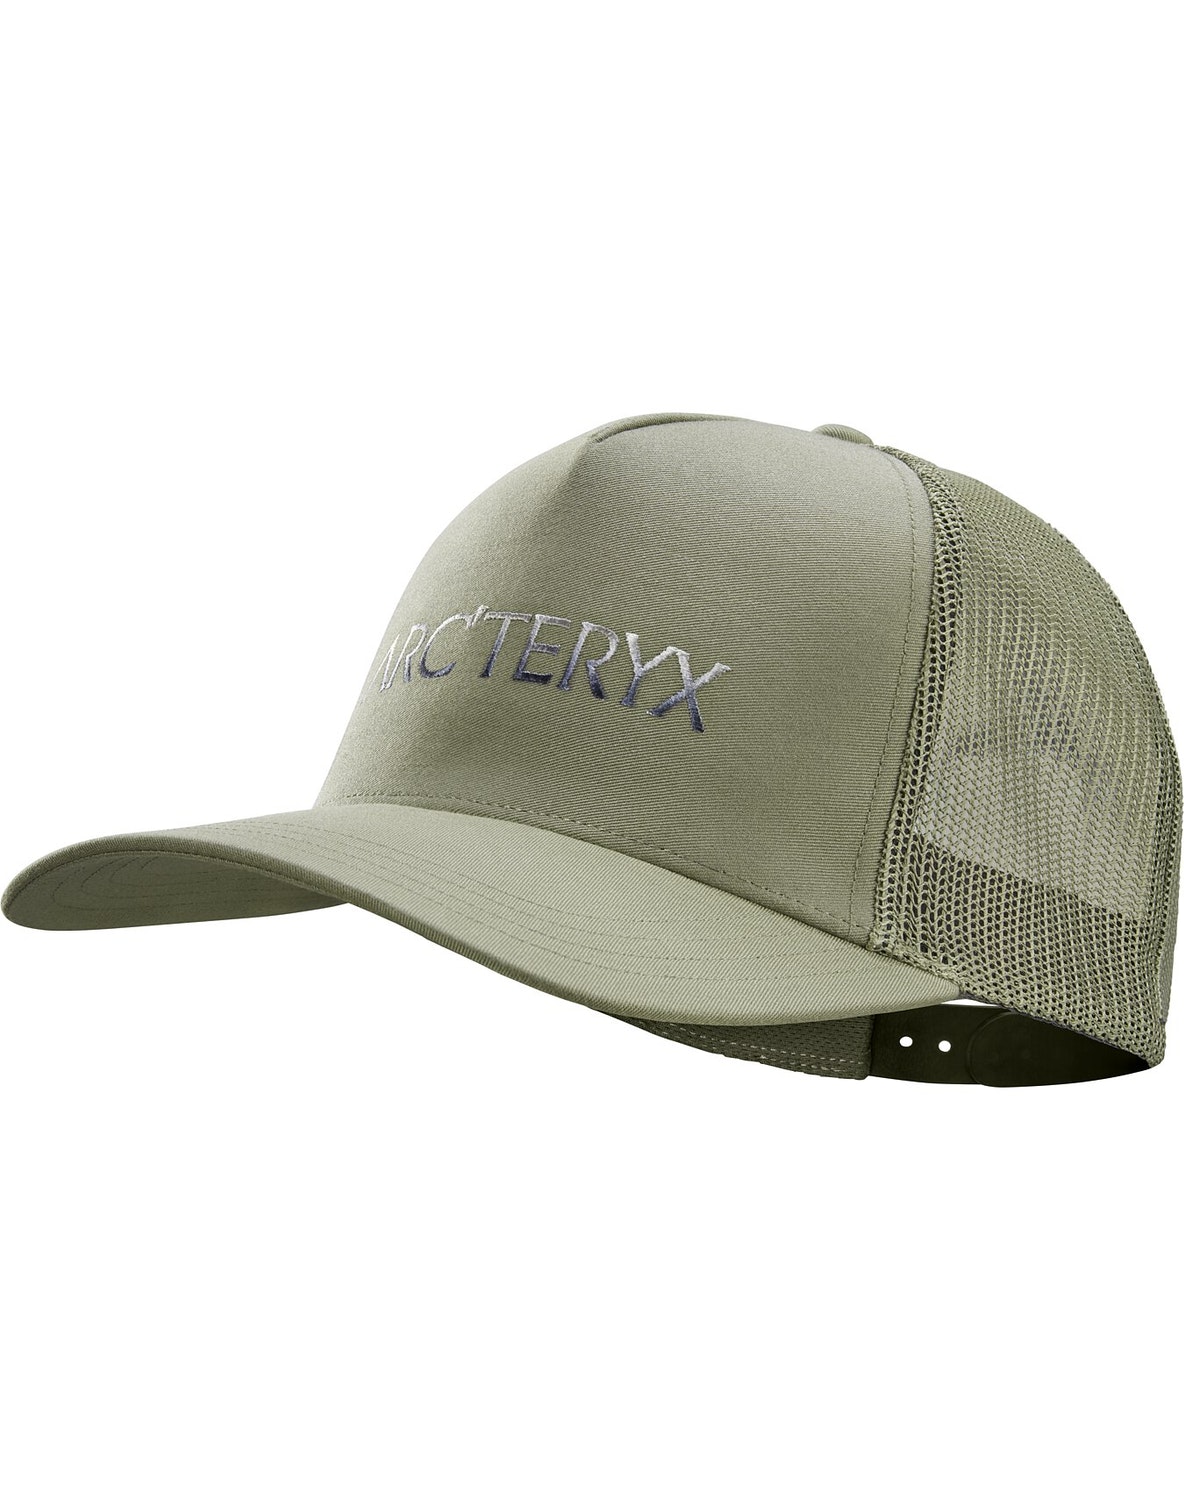 Hats Arc'teryx Polychrome Curved Brim Donna Verdi Chiaro - IT-6547516